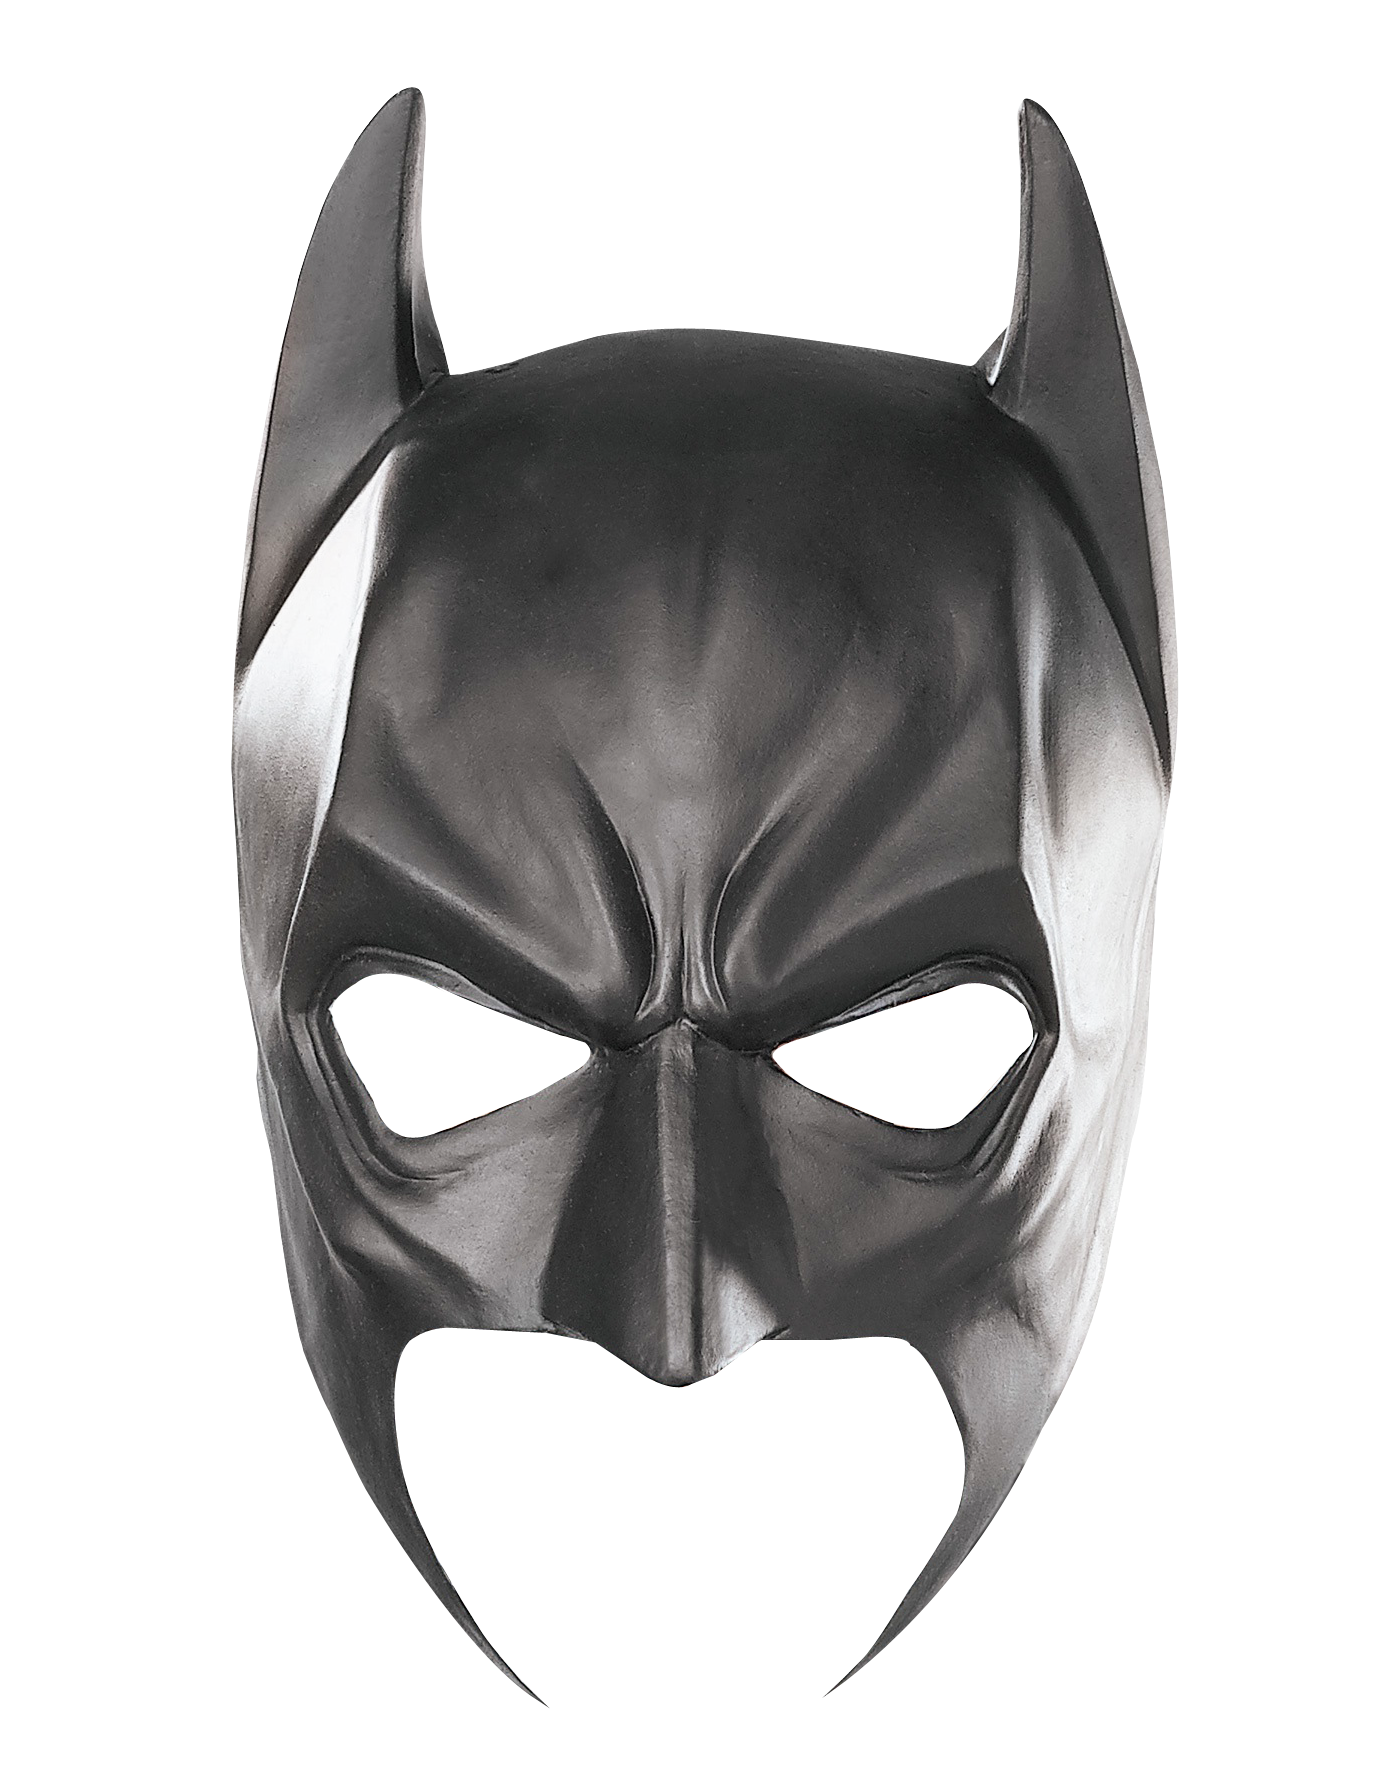 superhero batman mask template